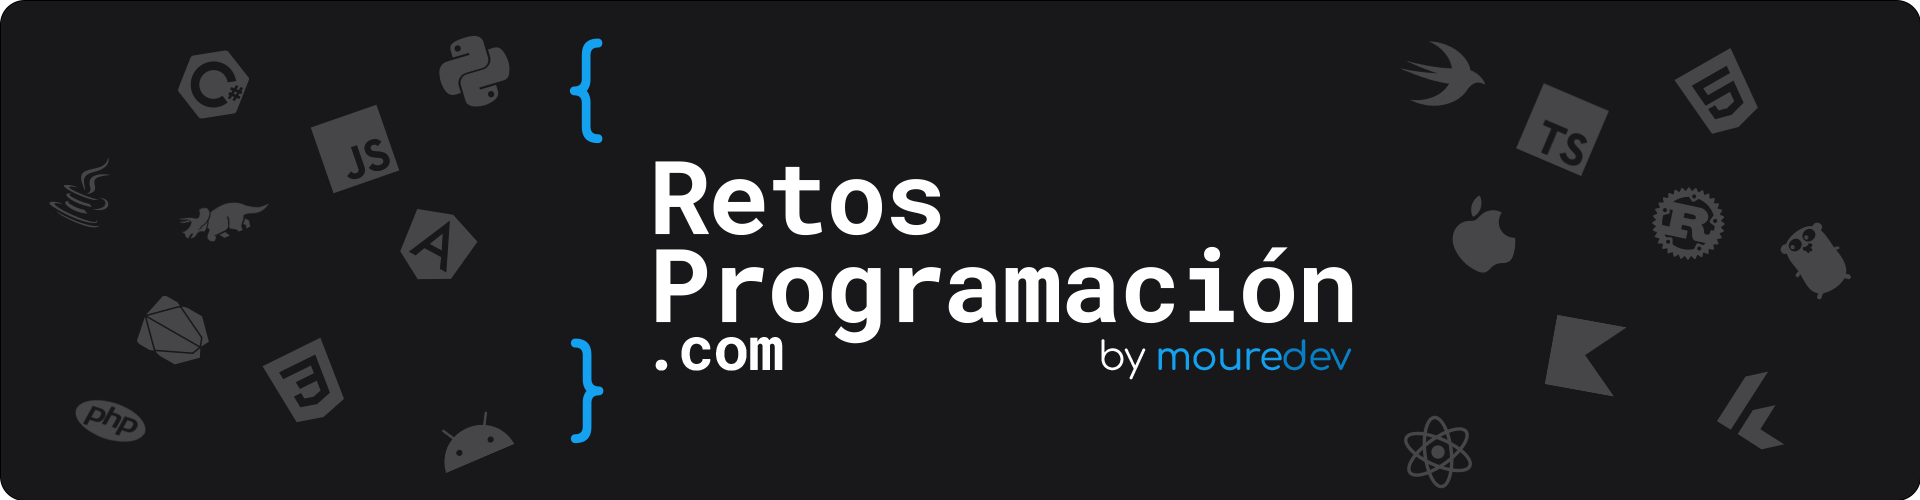 mouredev_retos_programacion.png